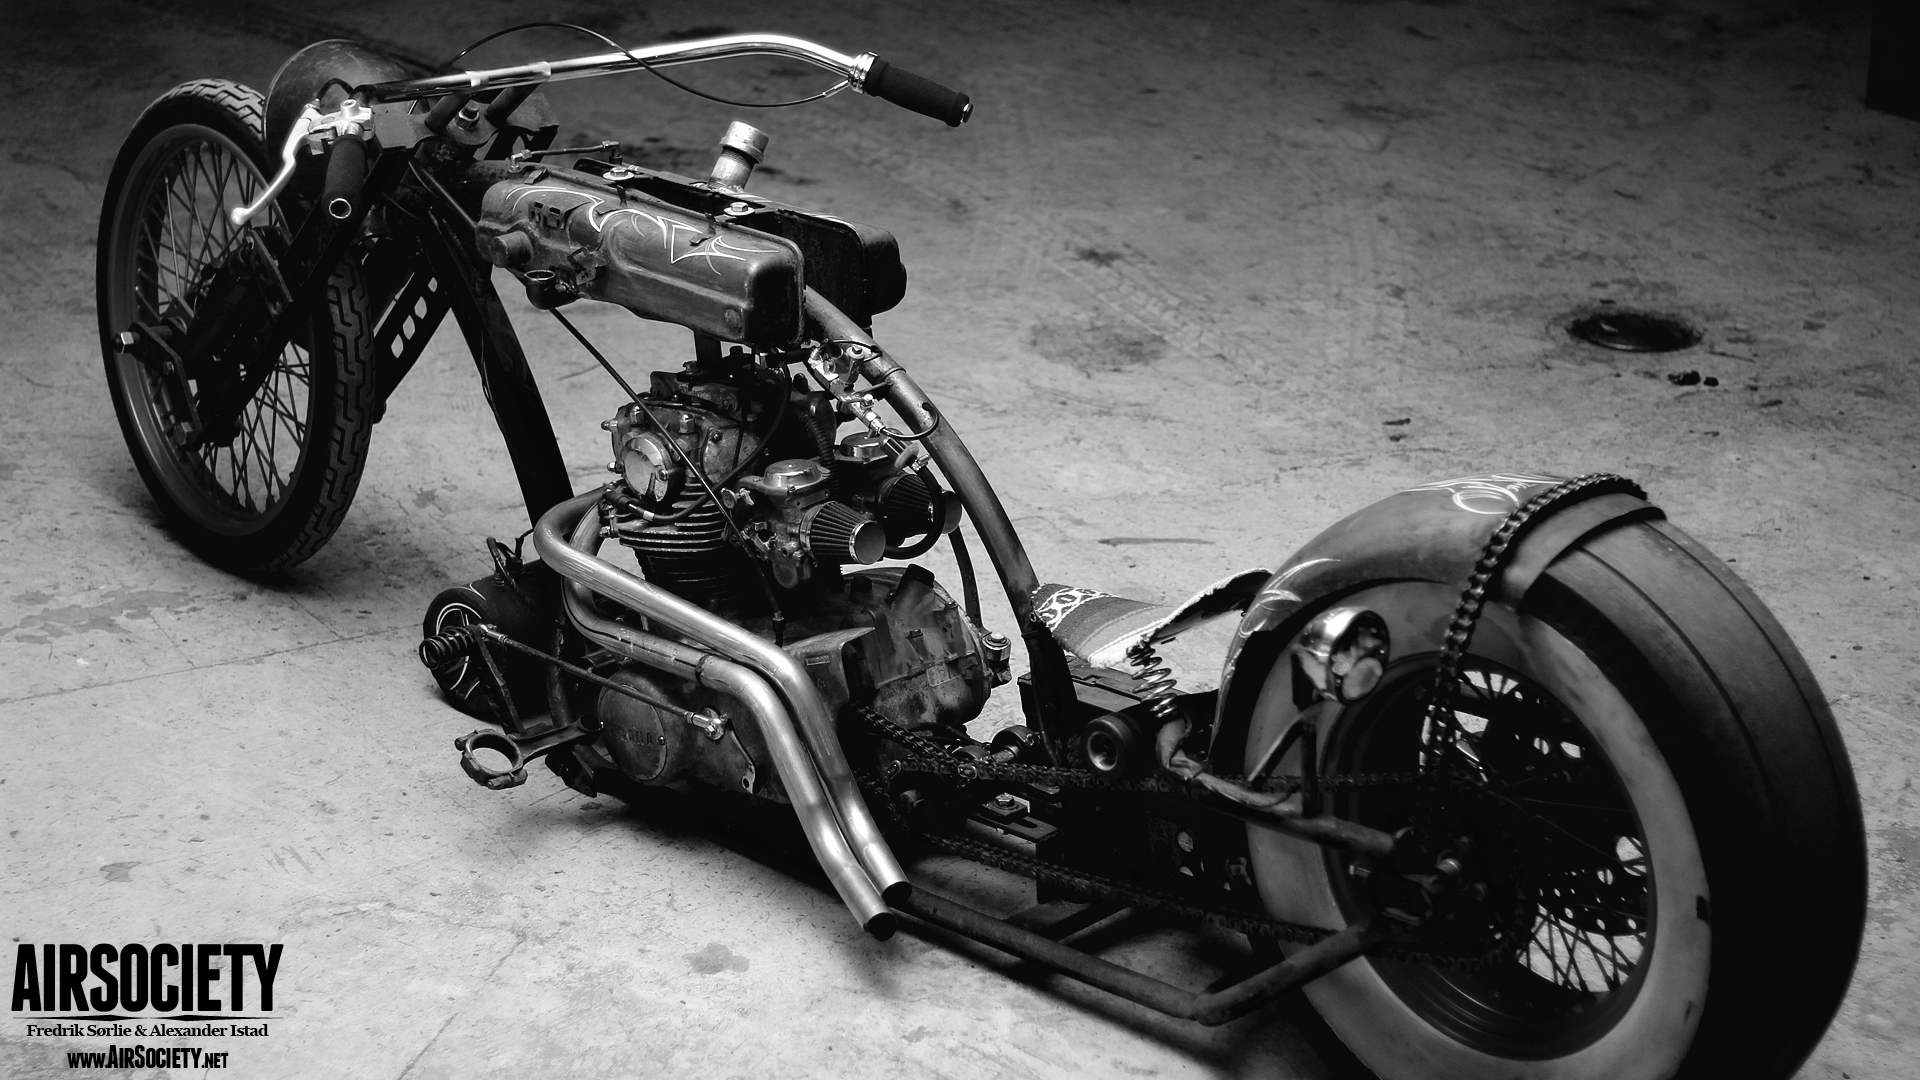 custom built old style yamaha chopper motorcycle.